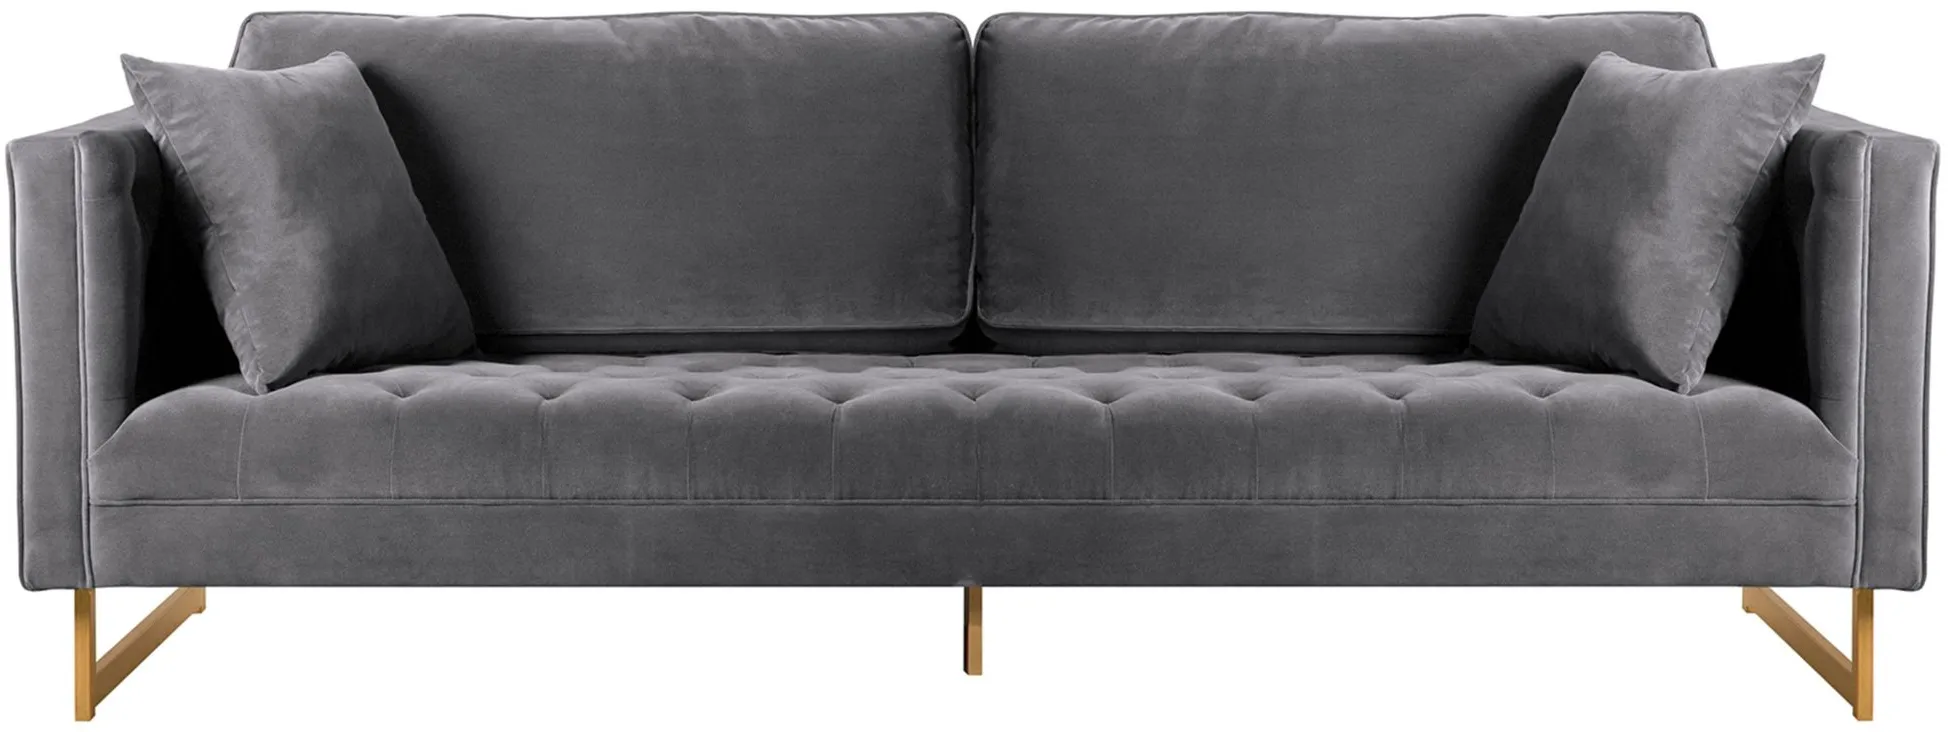 Lenox Sofa in Gray by Armen Living